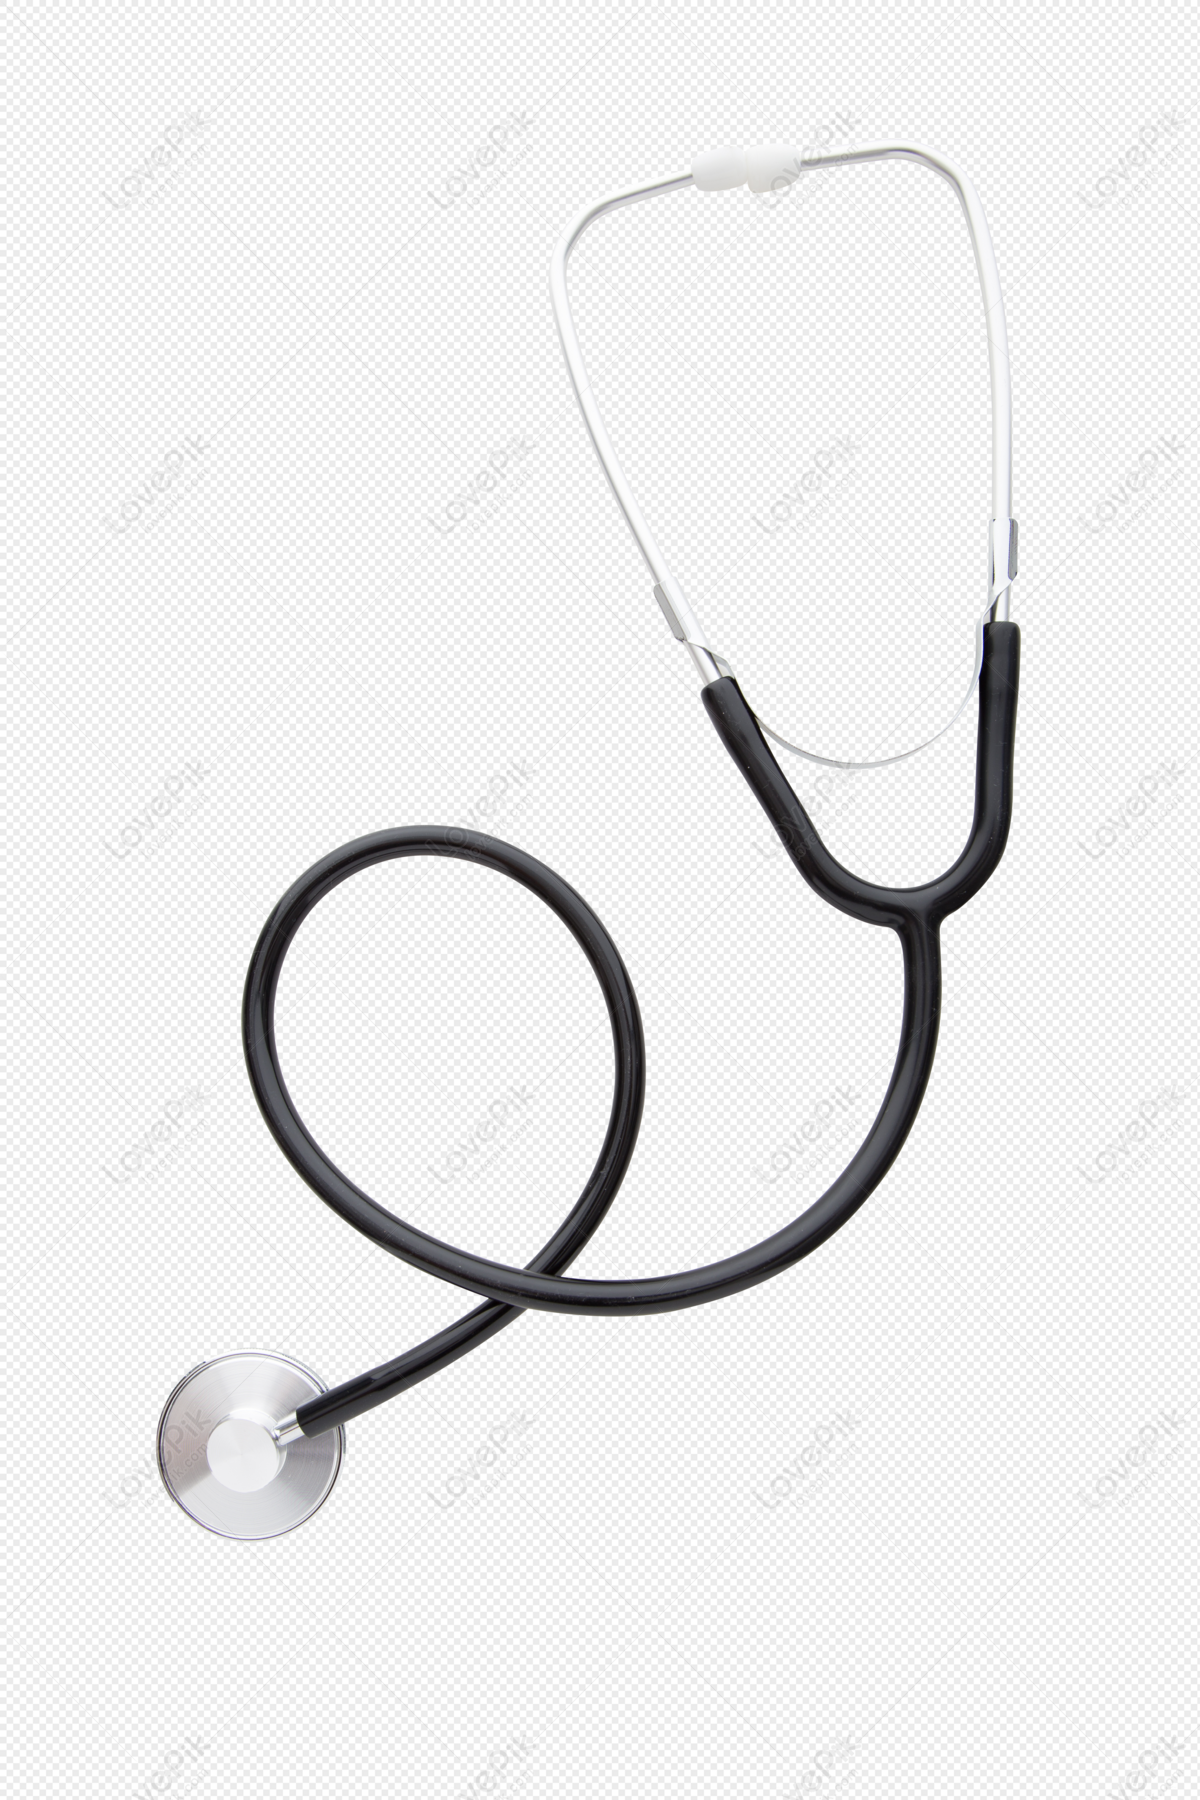 Sketch Draw Stethoscope Cartoon Stock Vector - Illustration of emergency,  healthy: 93593388